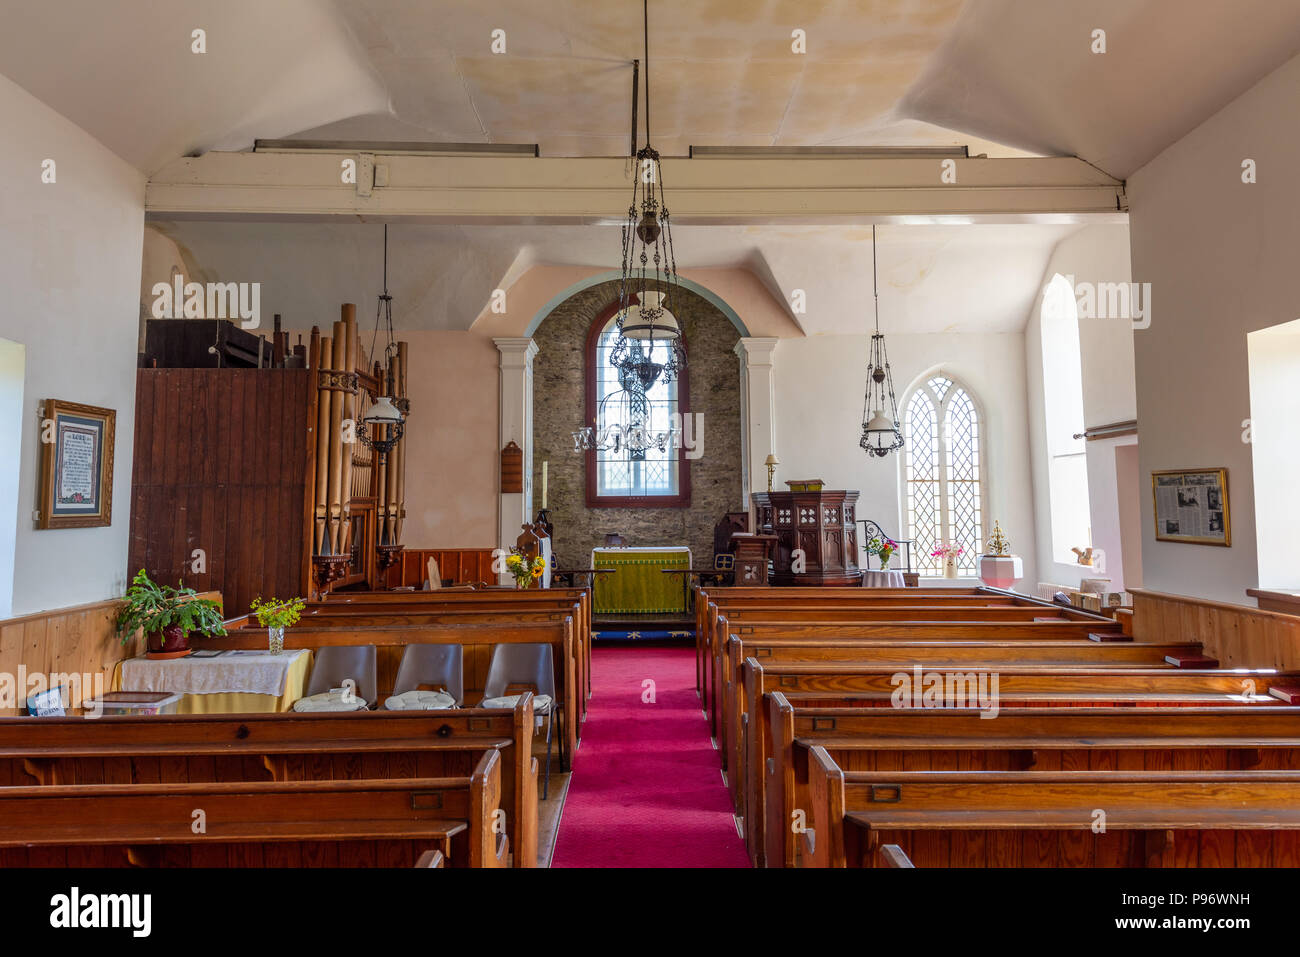 St Luke's Church interior, Baldwin, Isle of Man. Stock Photo